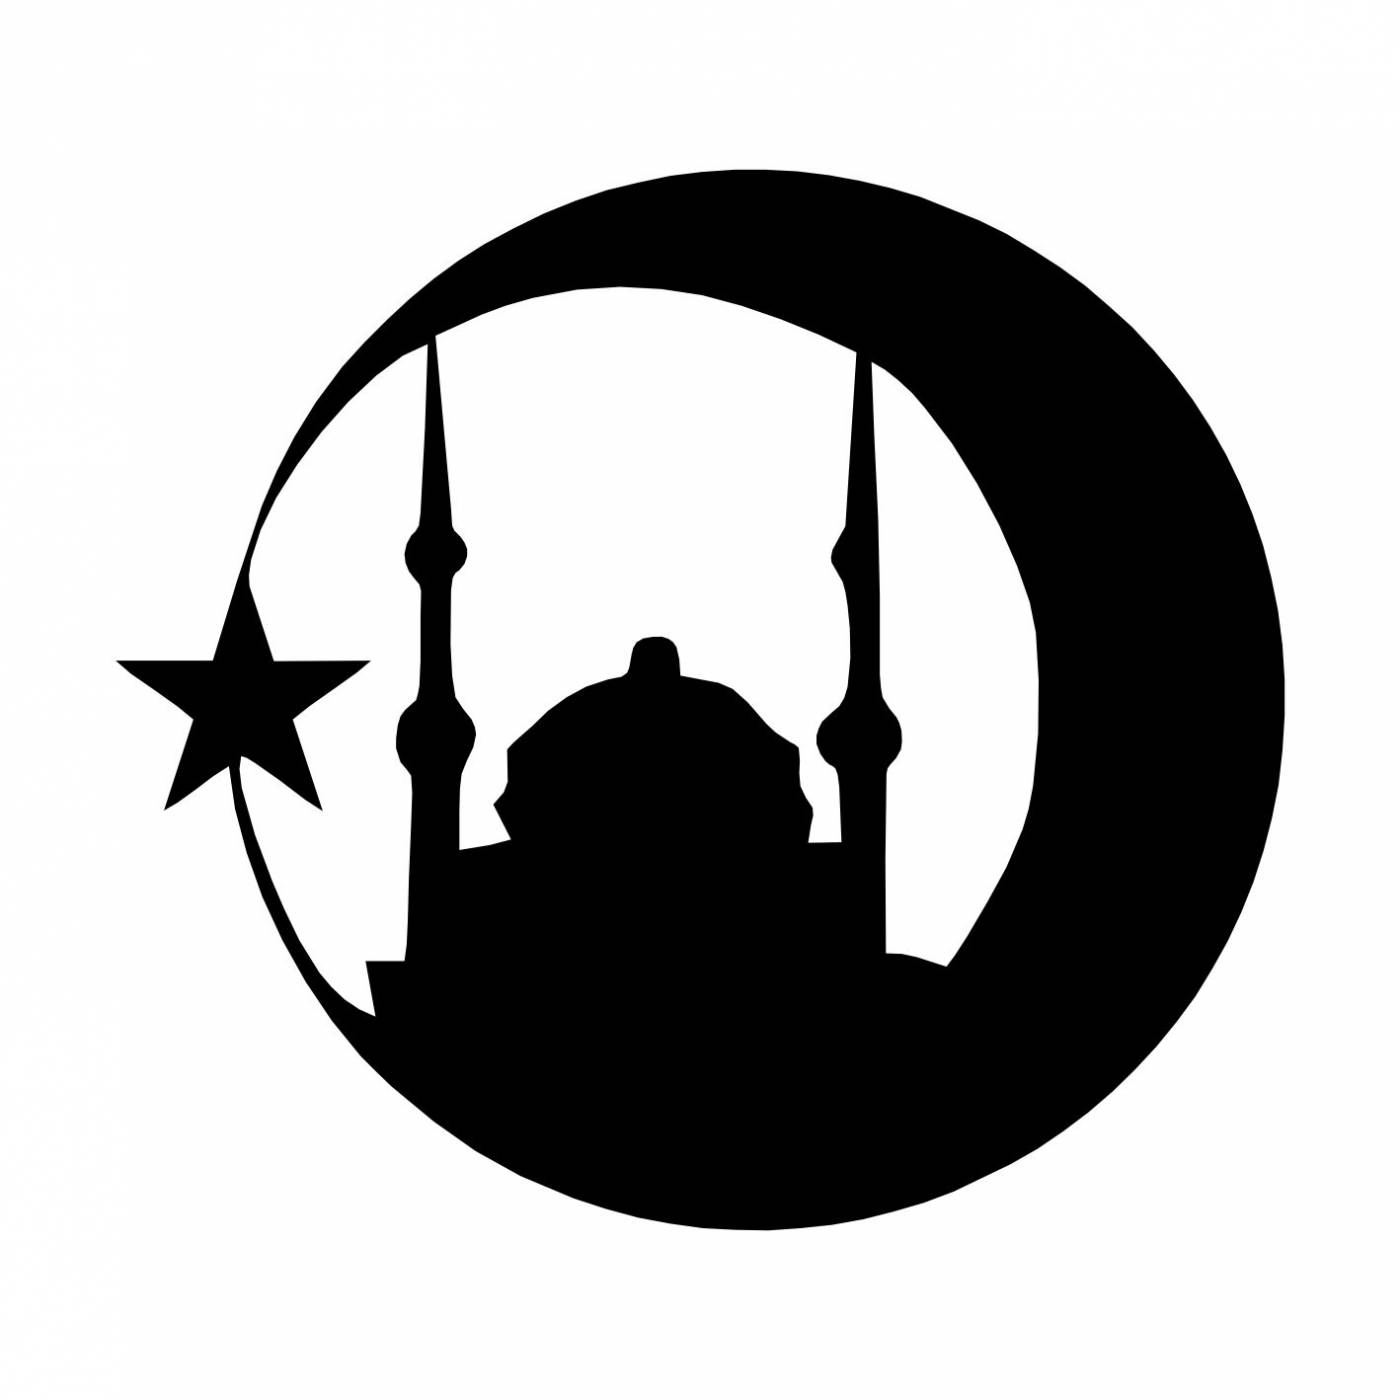 Мусульманские наклейки для Пато на казан экспрессе